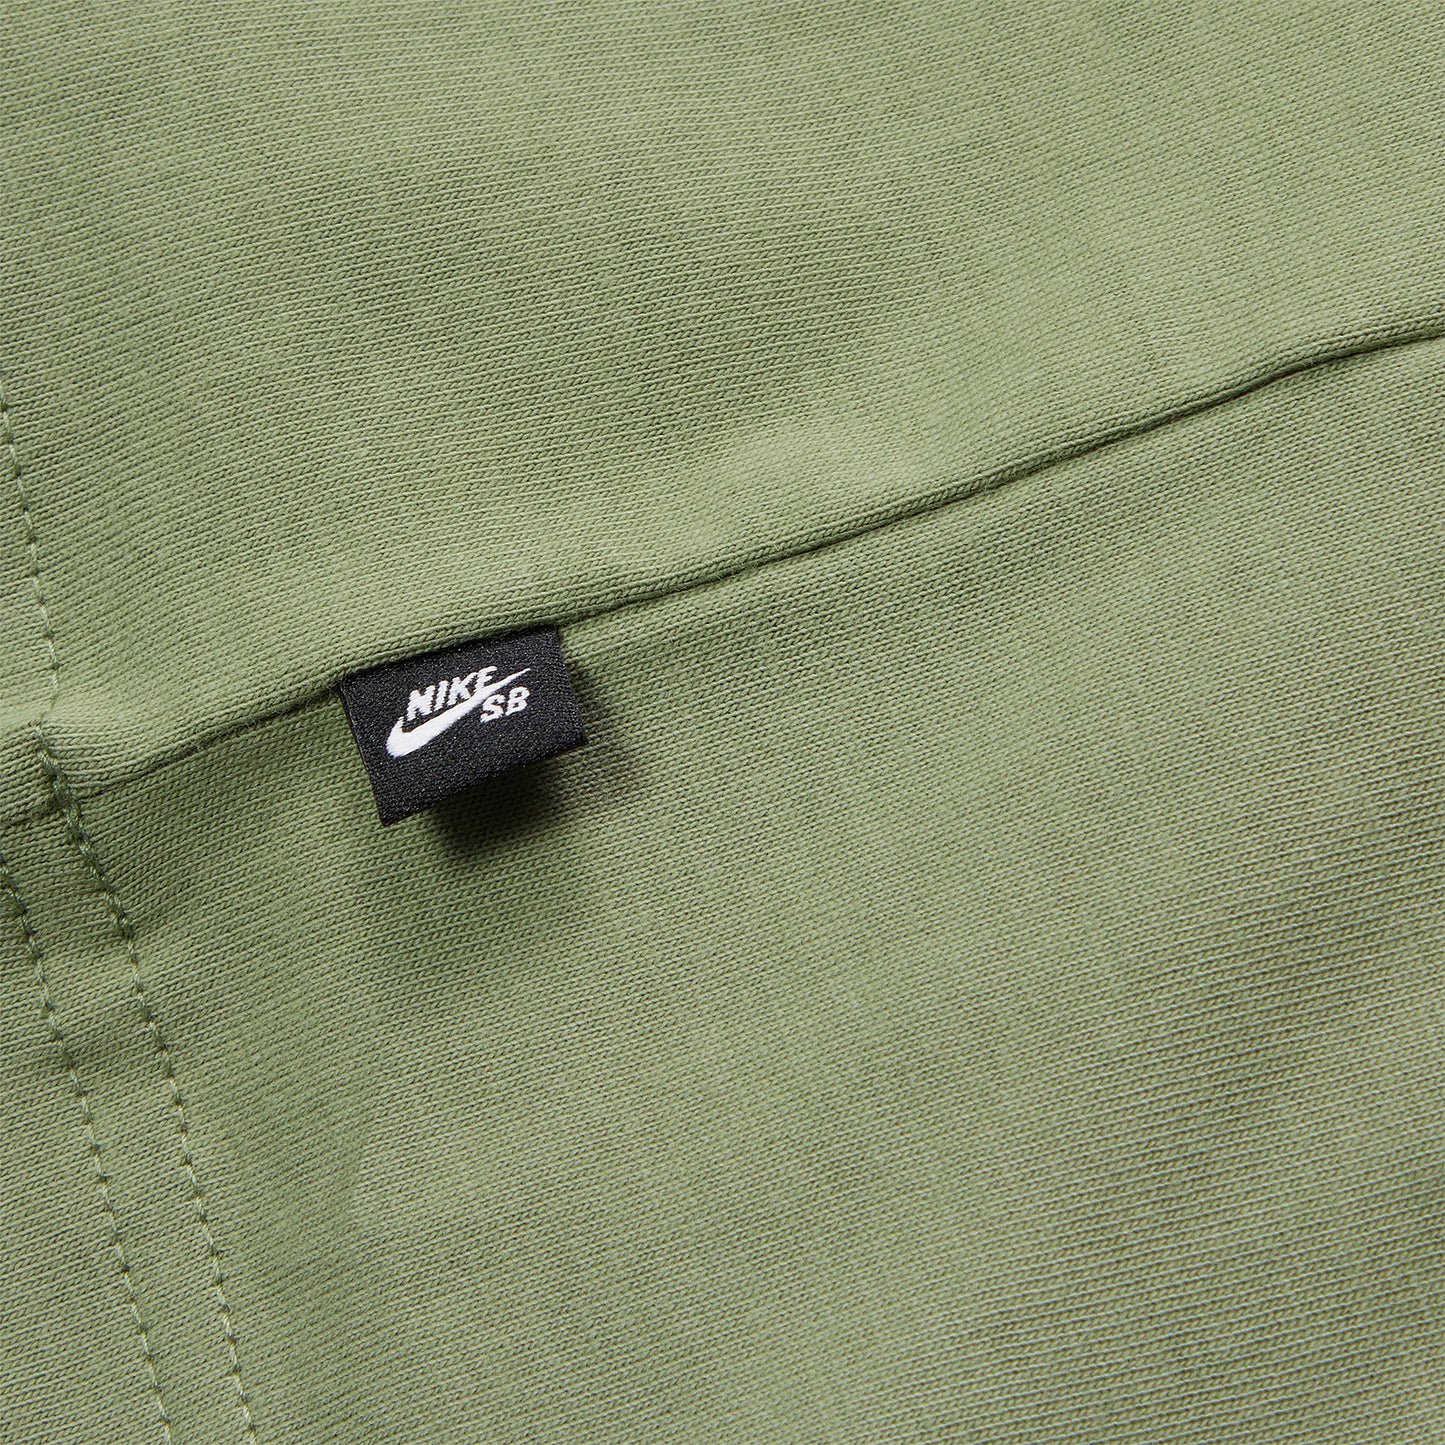 Nike SB T-Shirt (Oil Green)